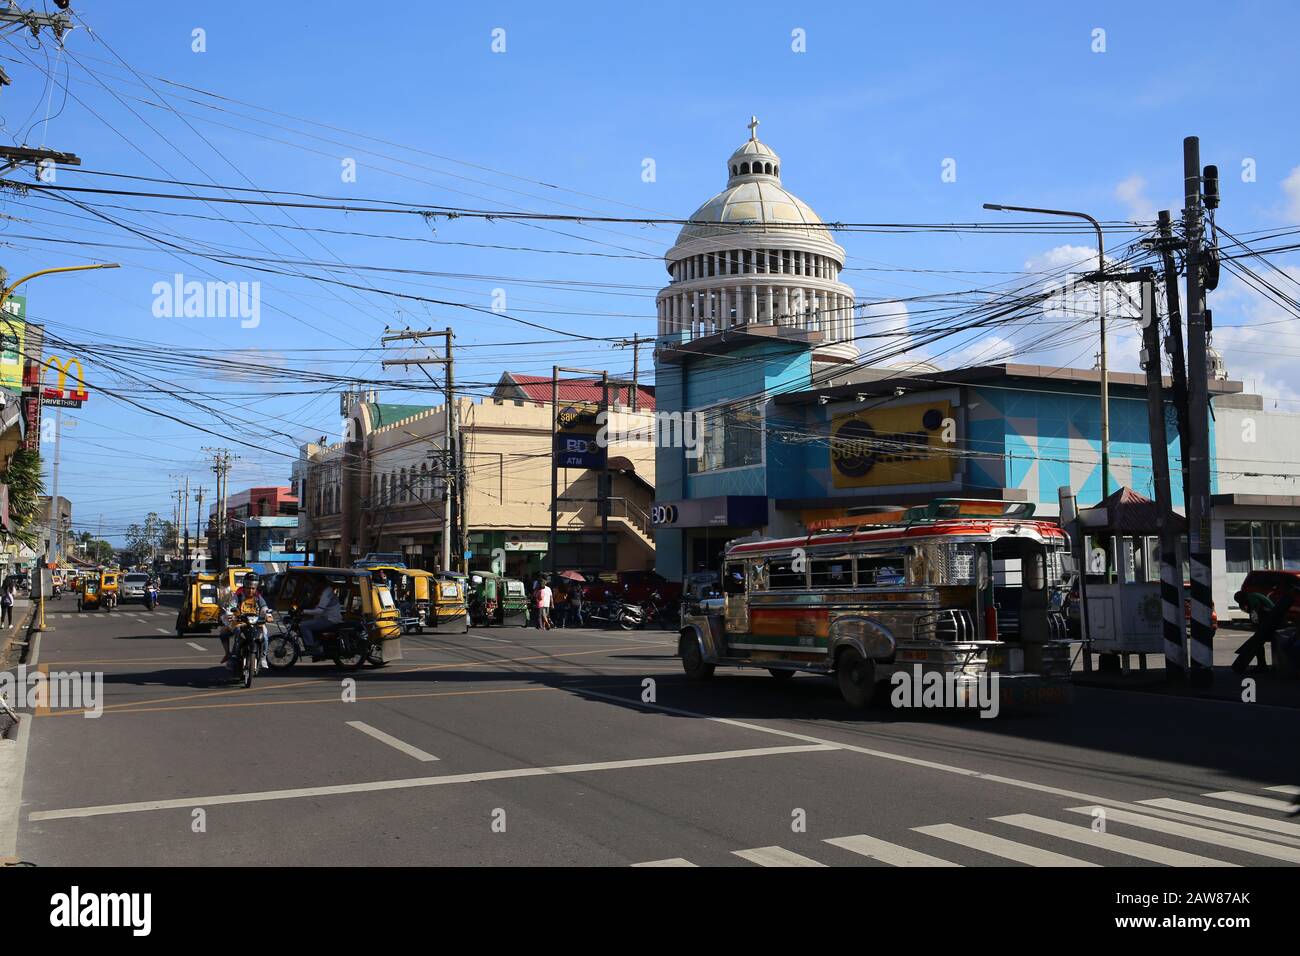 A street in Sorsogon, Philippines Stock Photo